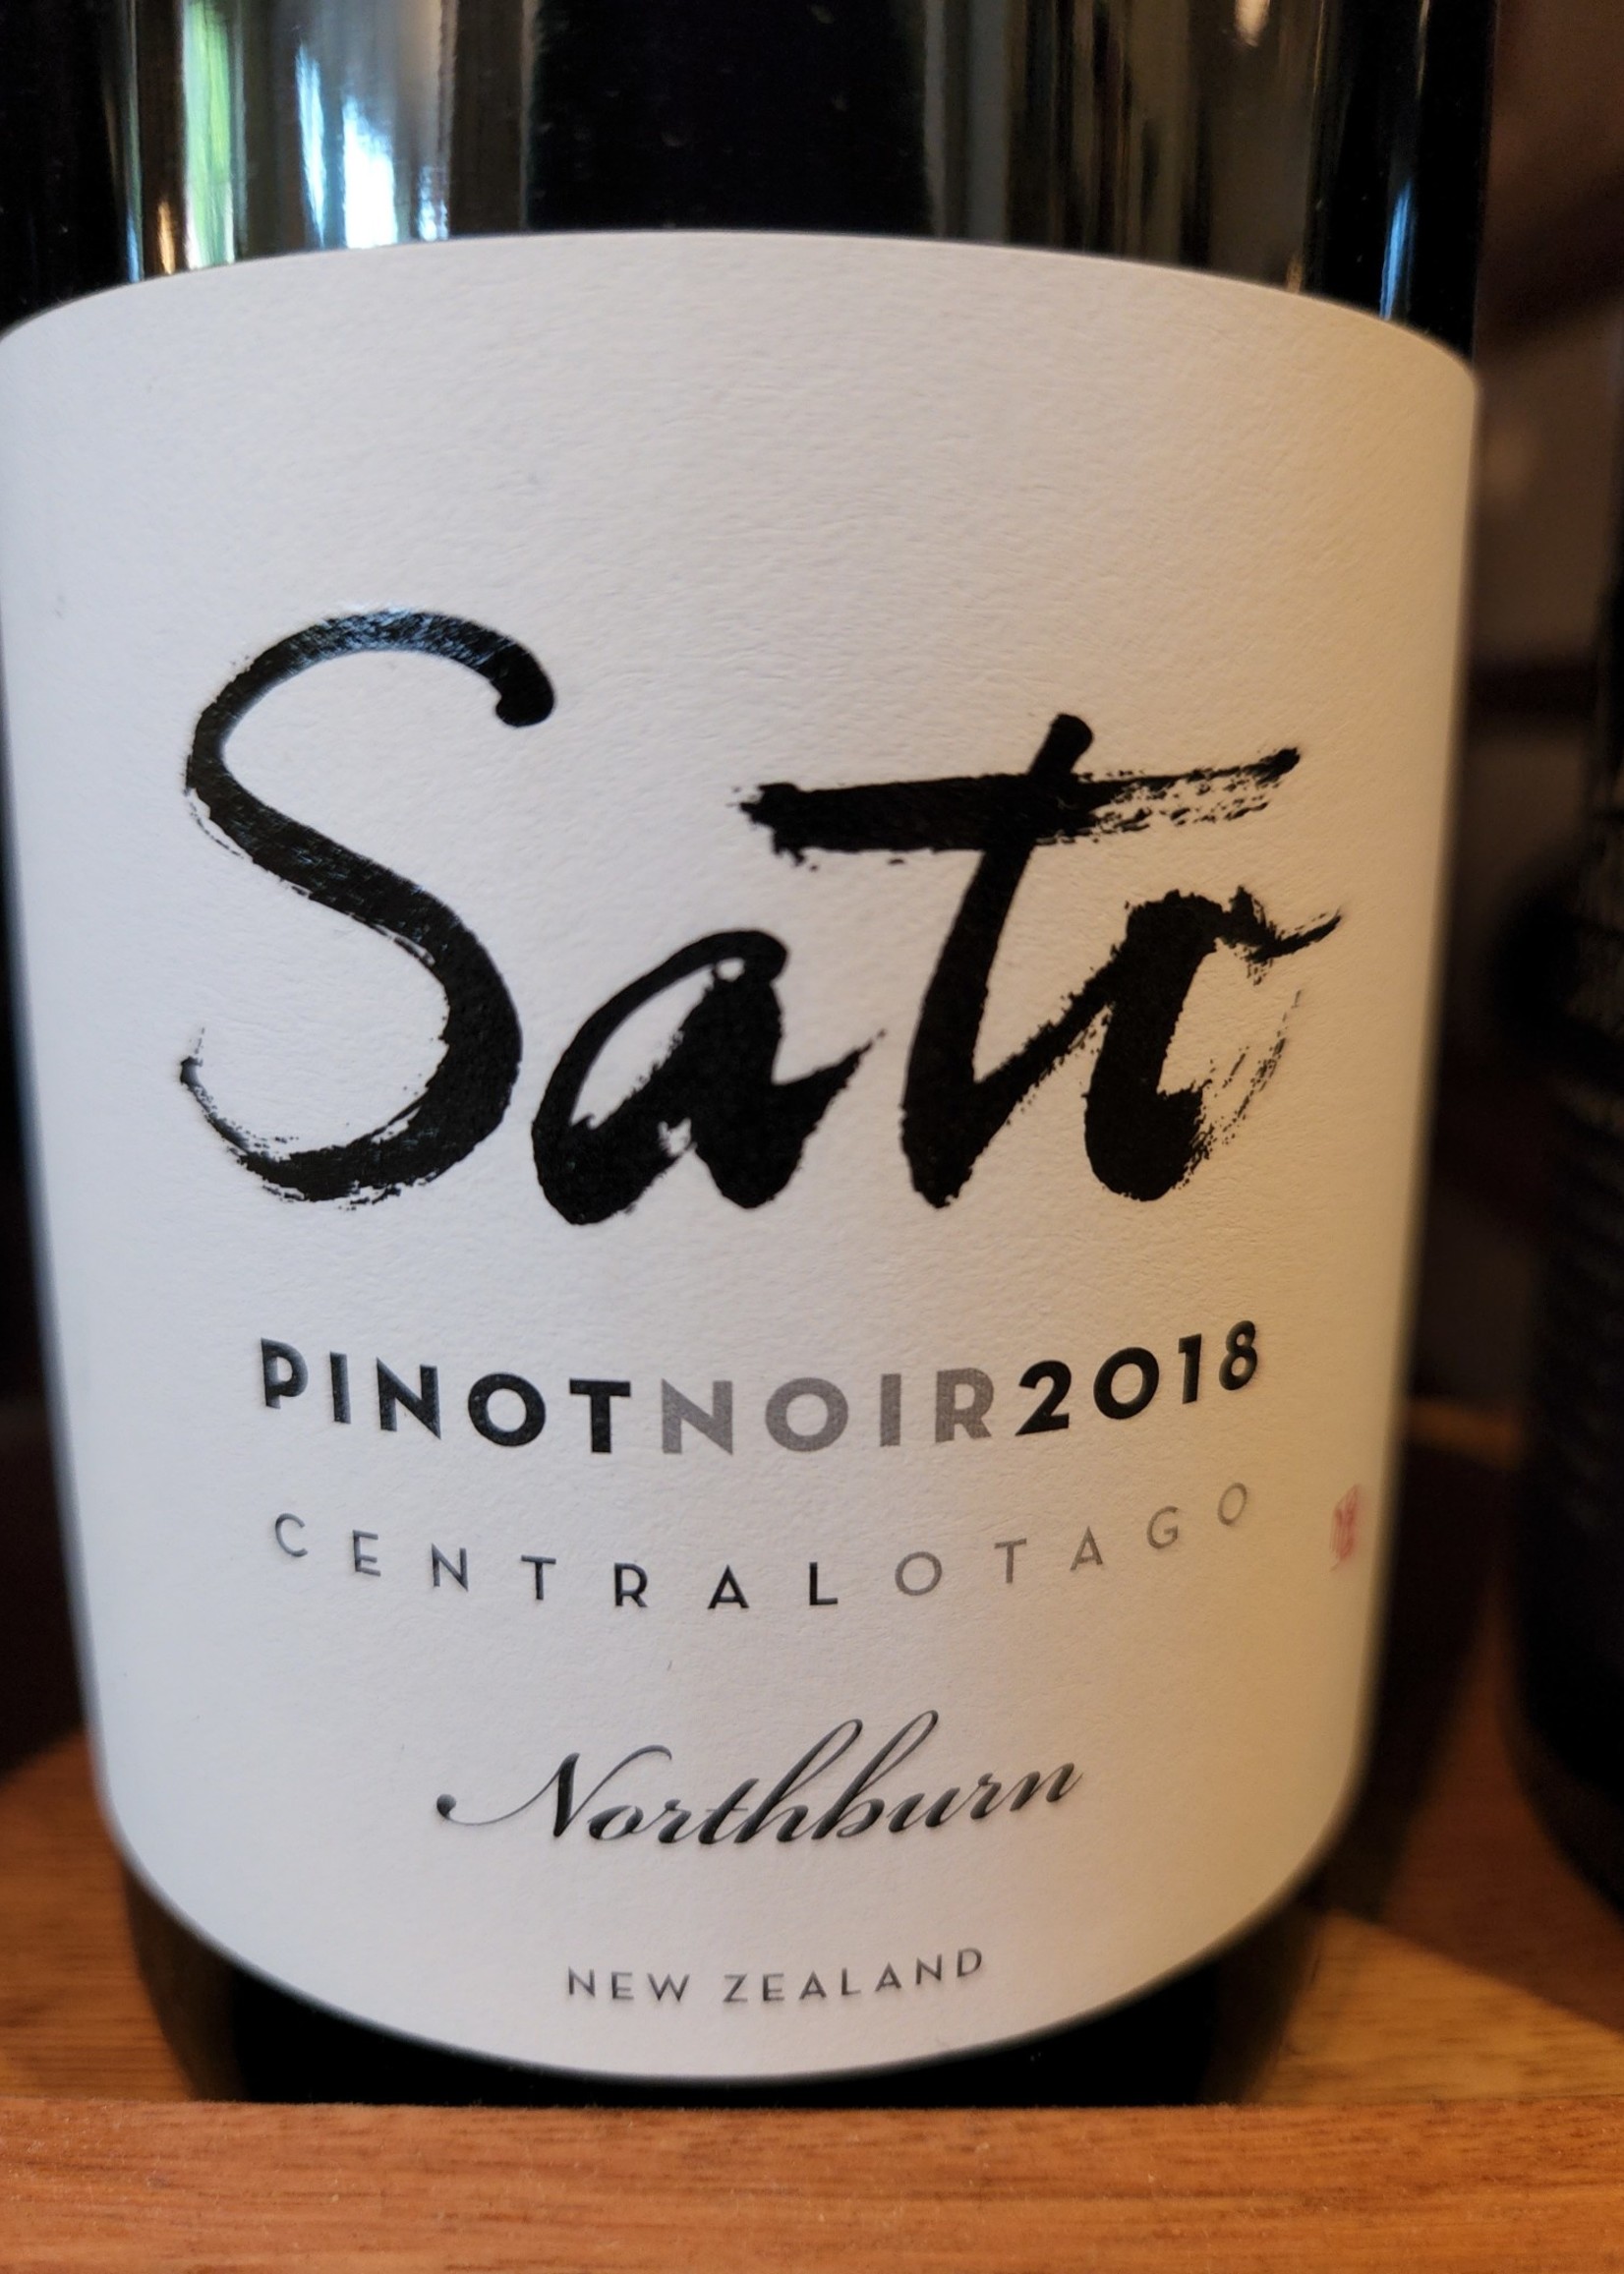 Sato Central Otago Northburn Pinot Noir 2018